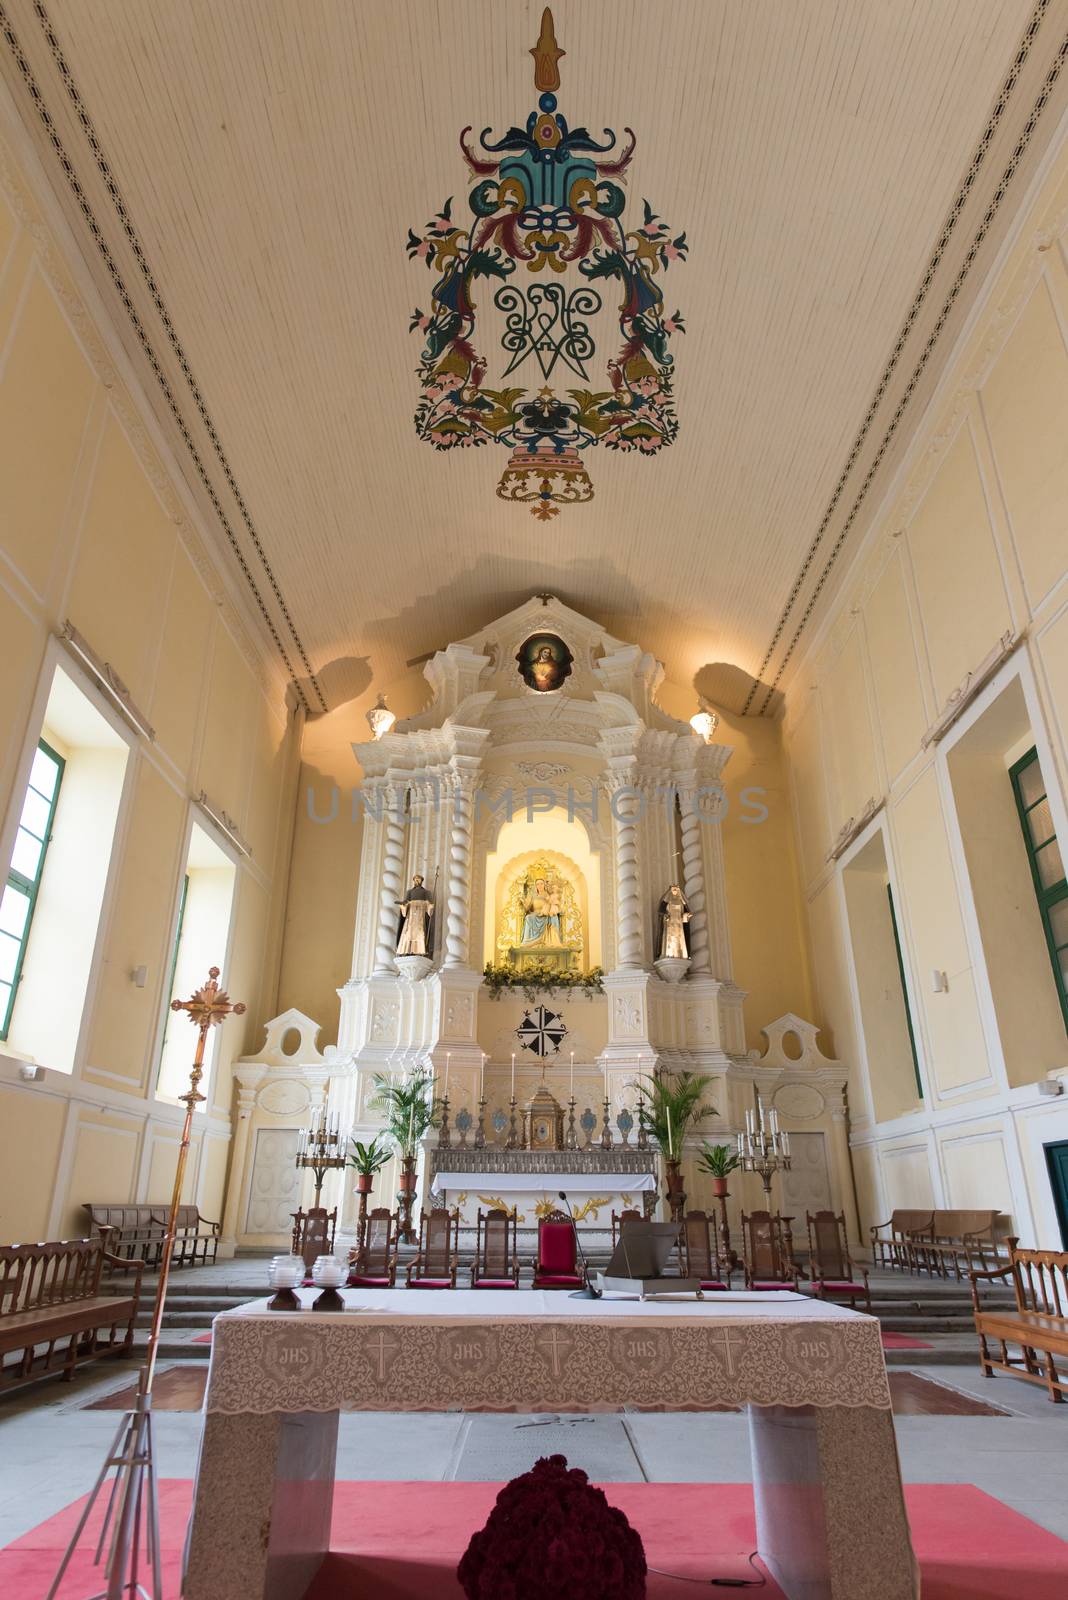 Inside of St. Dominic (Domingos) church. Largo do Senado in Macau by MCVSN